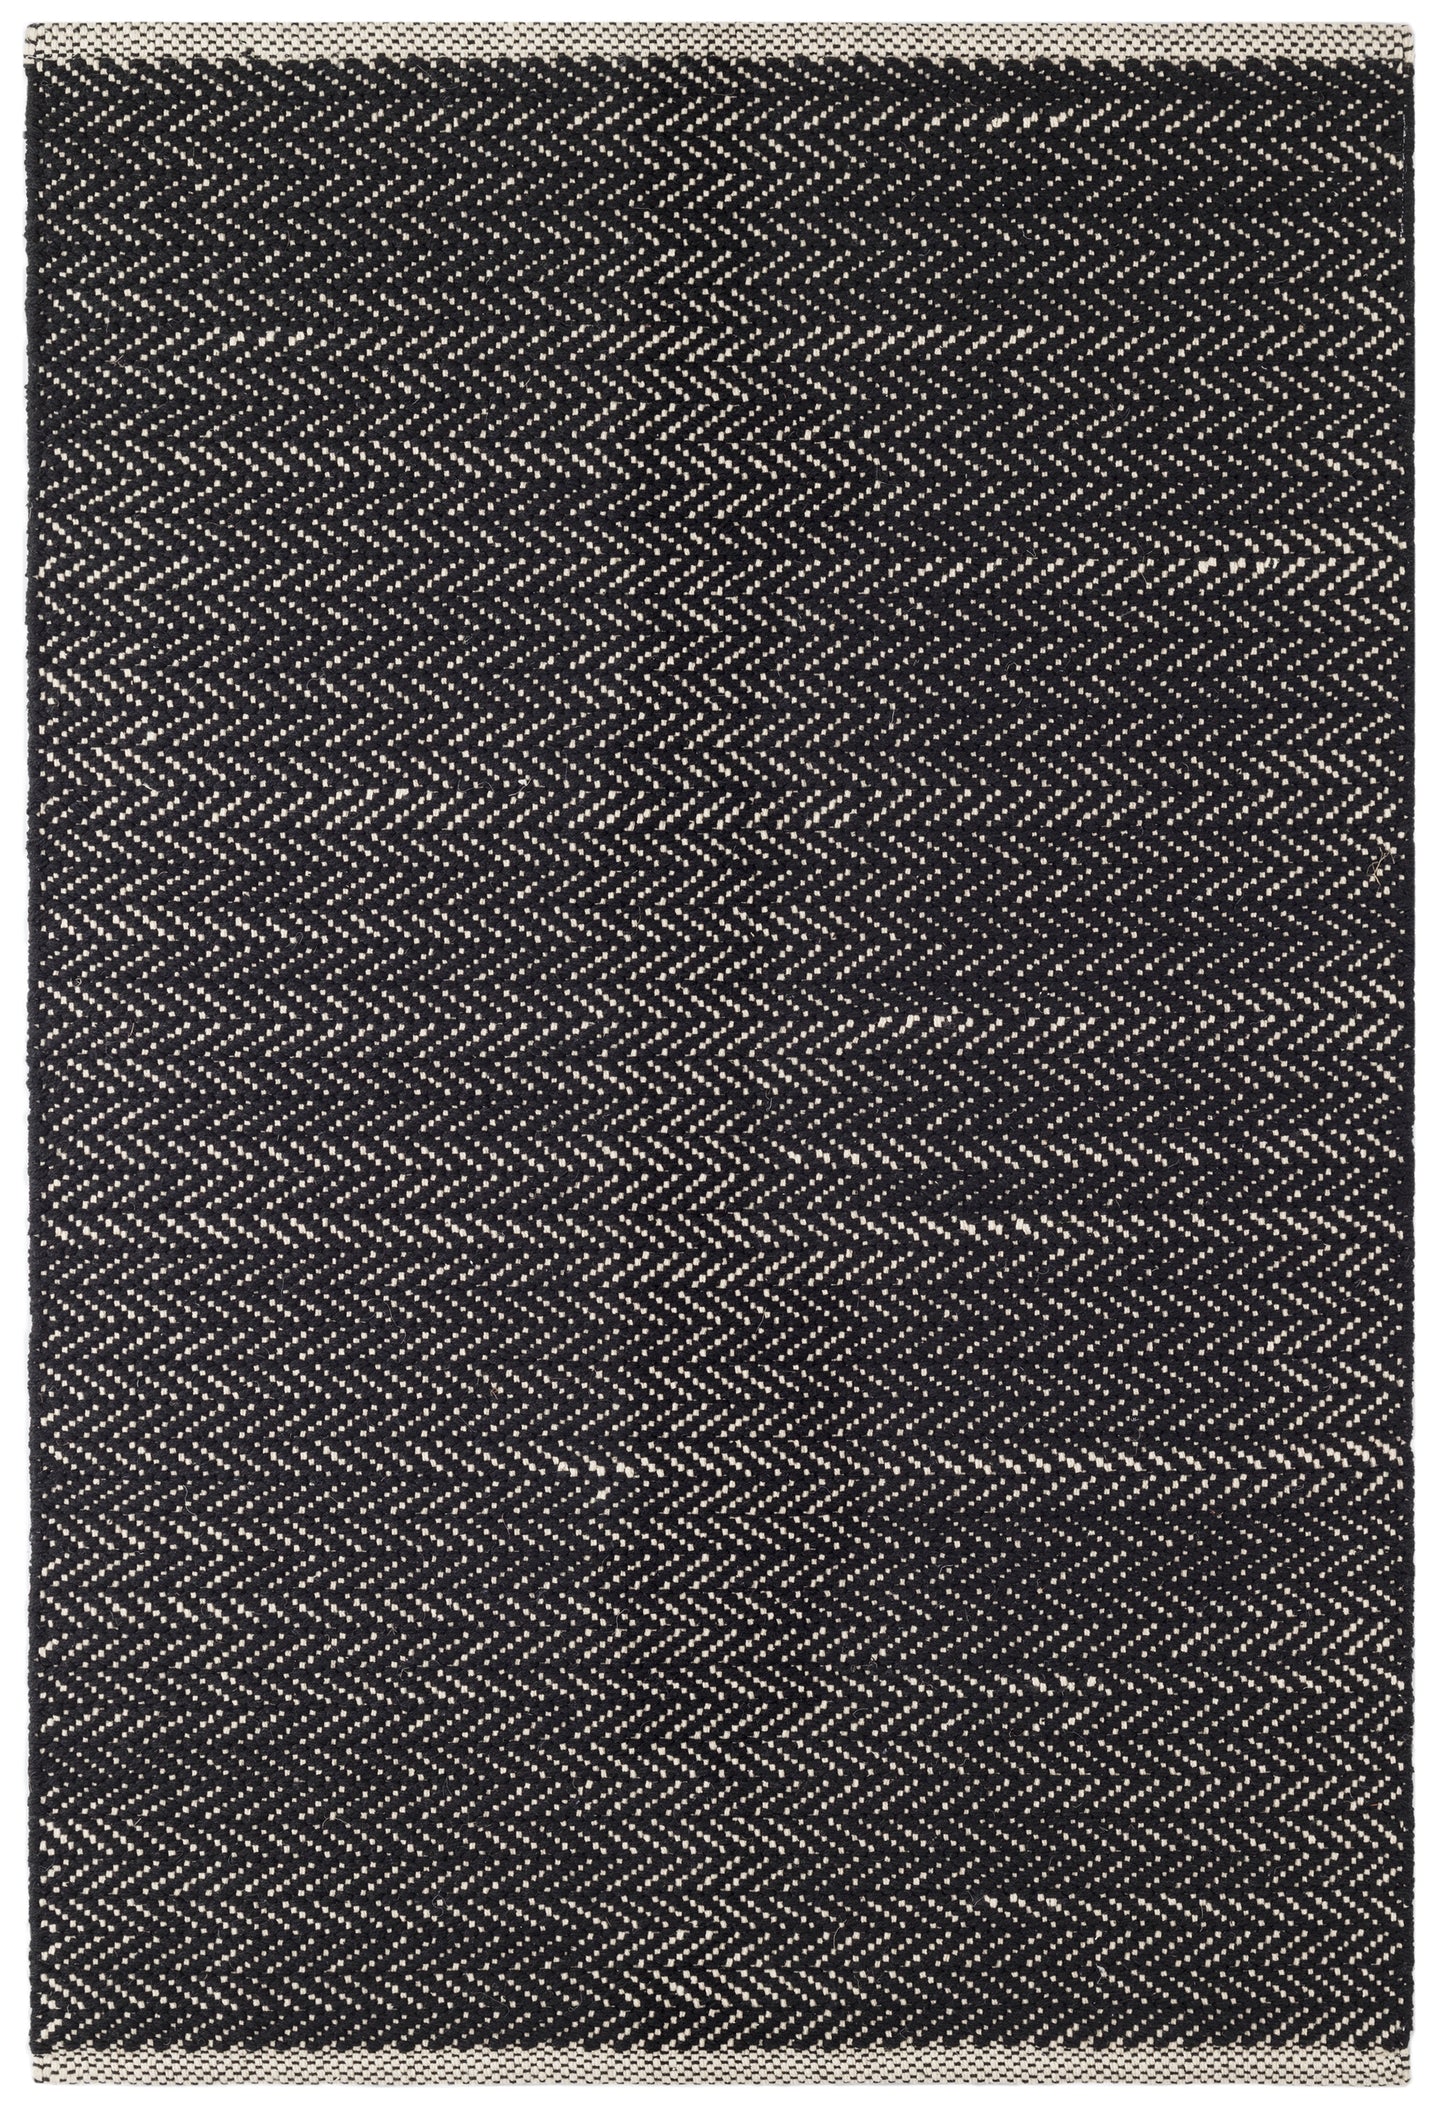 Rug - Woven Cotton - Herringbone Black